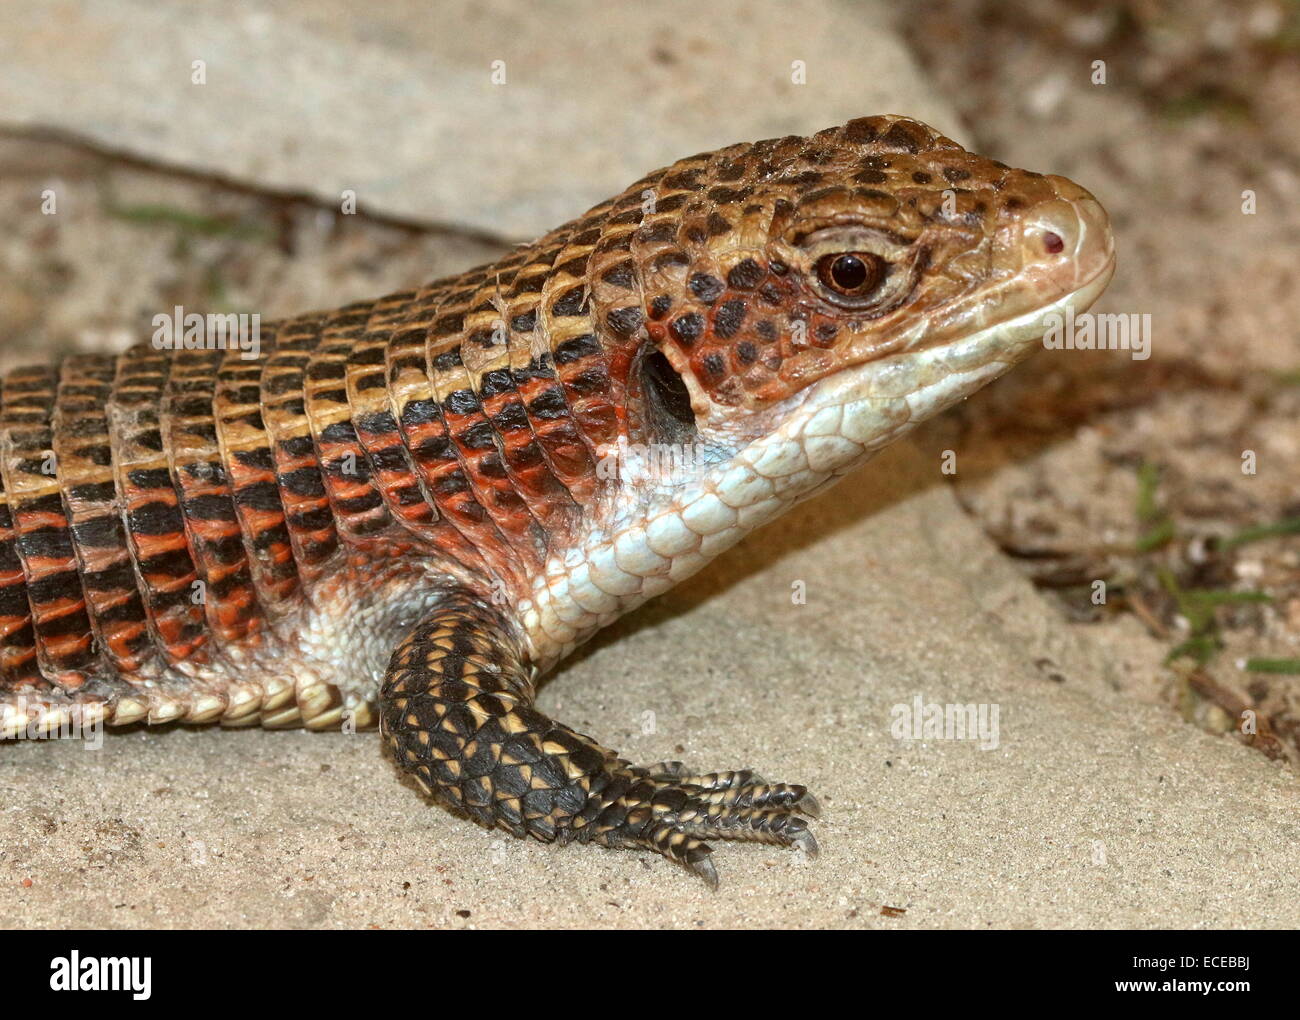 Sudan or Western plated lizard (Gerrhosaurus major, Broadleysaurus major) Stock Photo